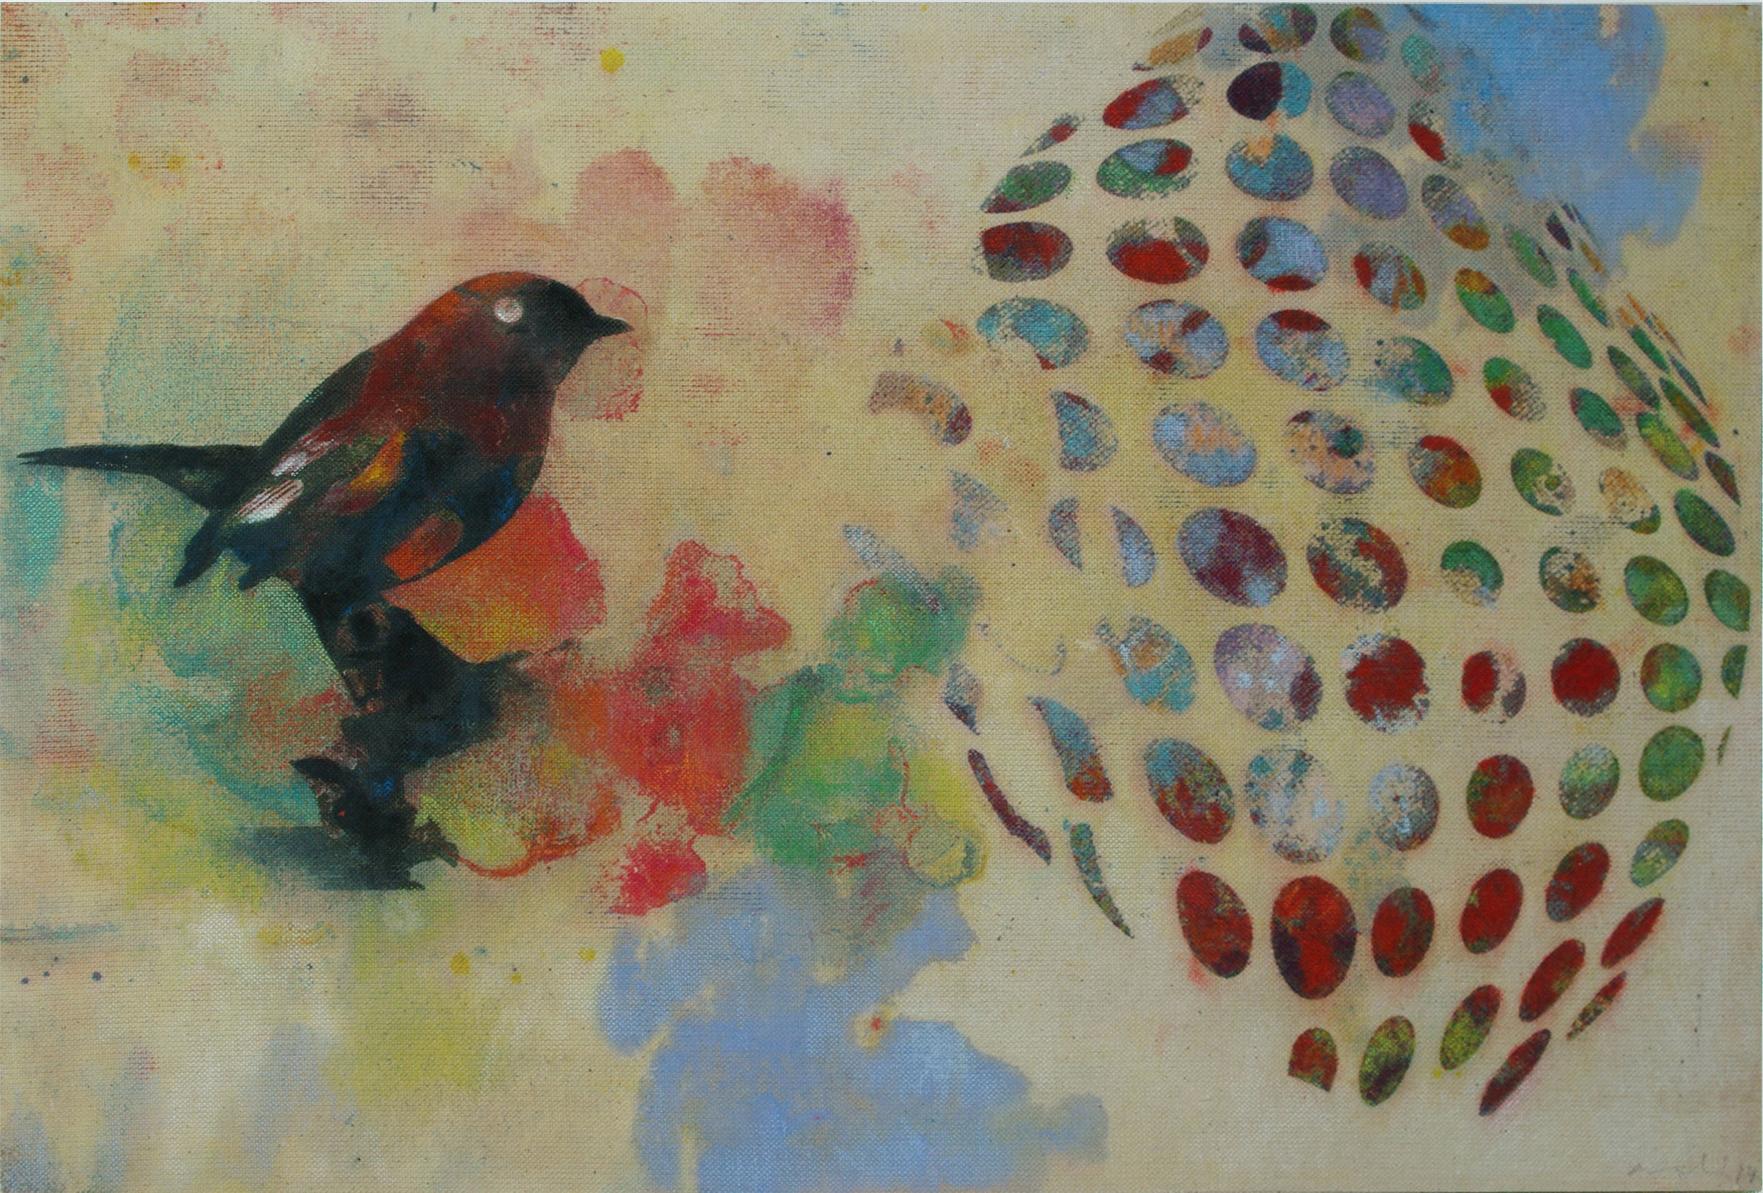 Birds 023- Contemporary, Abstract, Expressionist, Modern, Street art, Surrealist - Mixed Media Art by Francisco Nicolás